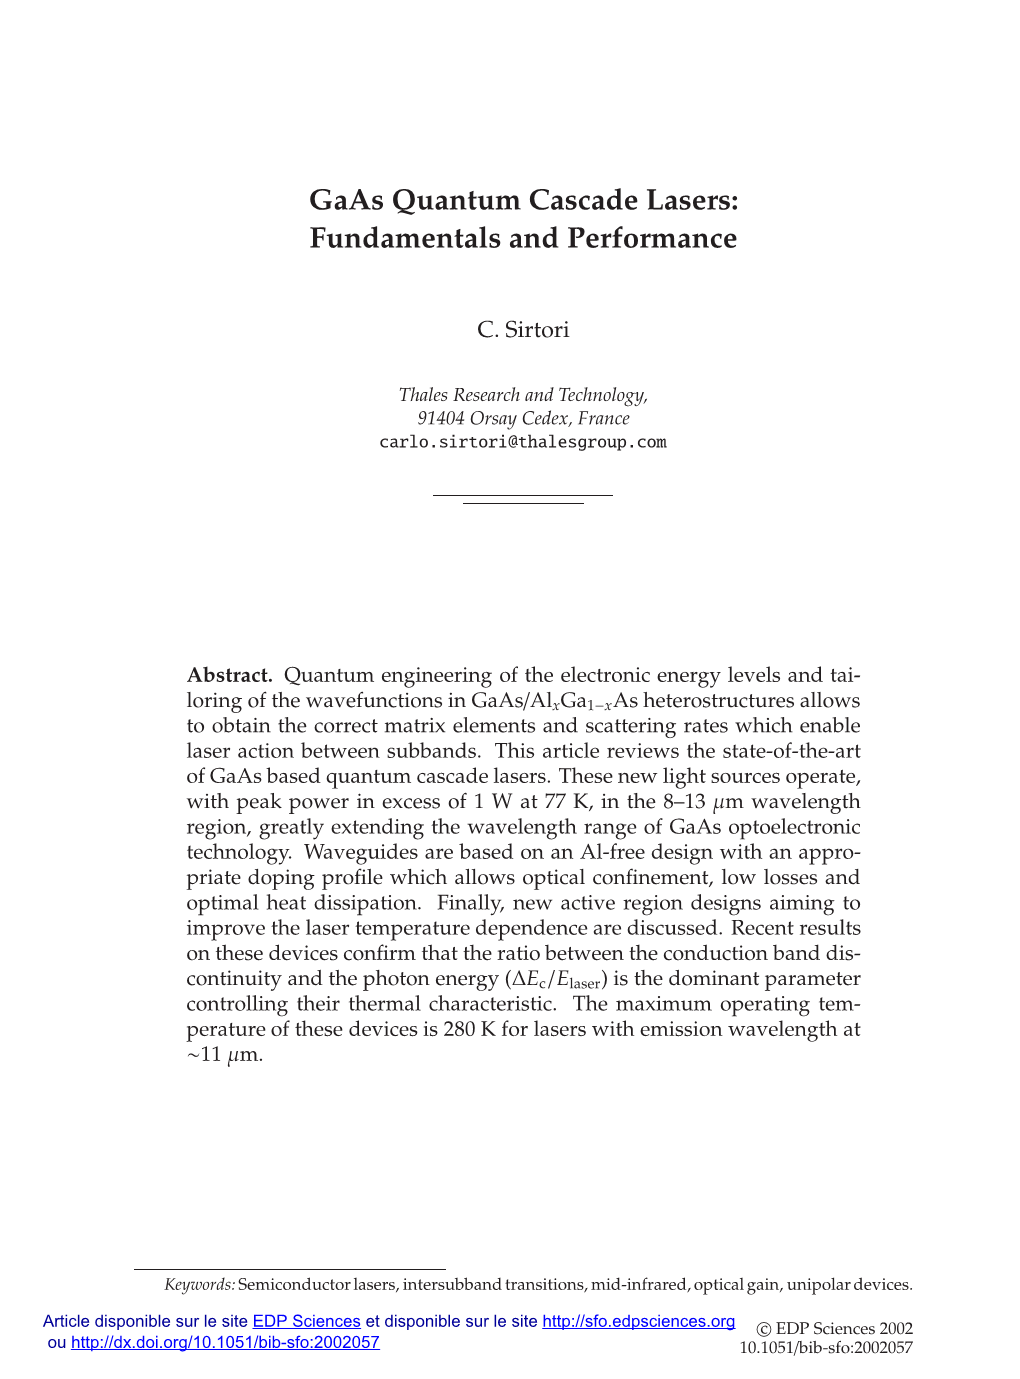 Gaas Quantum Cascade Lasers: Fundamentals and Performance